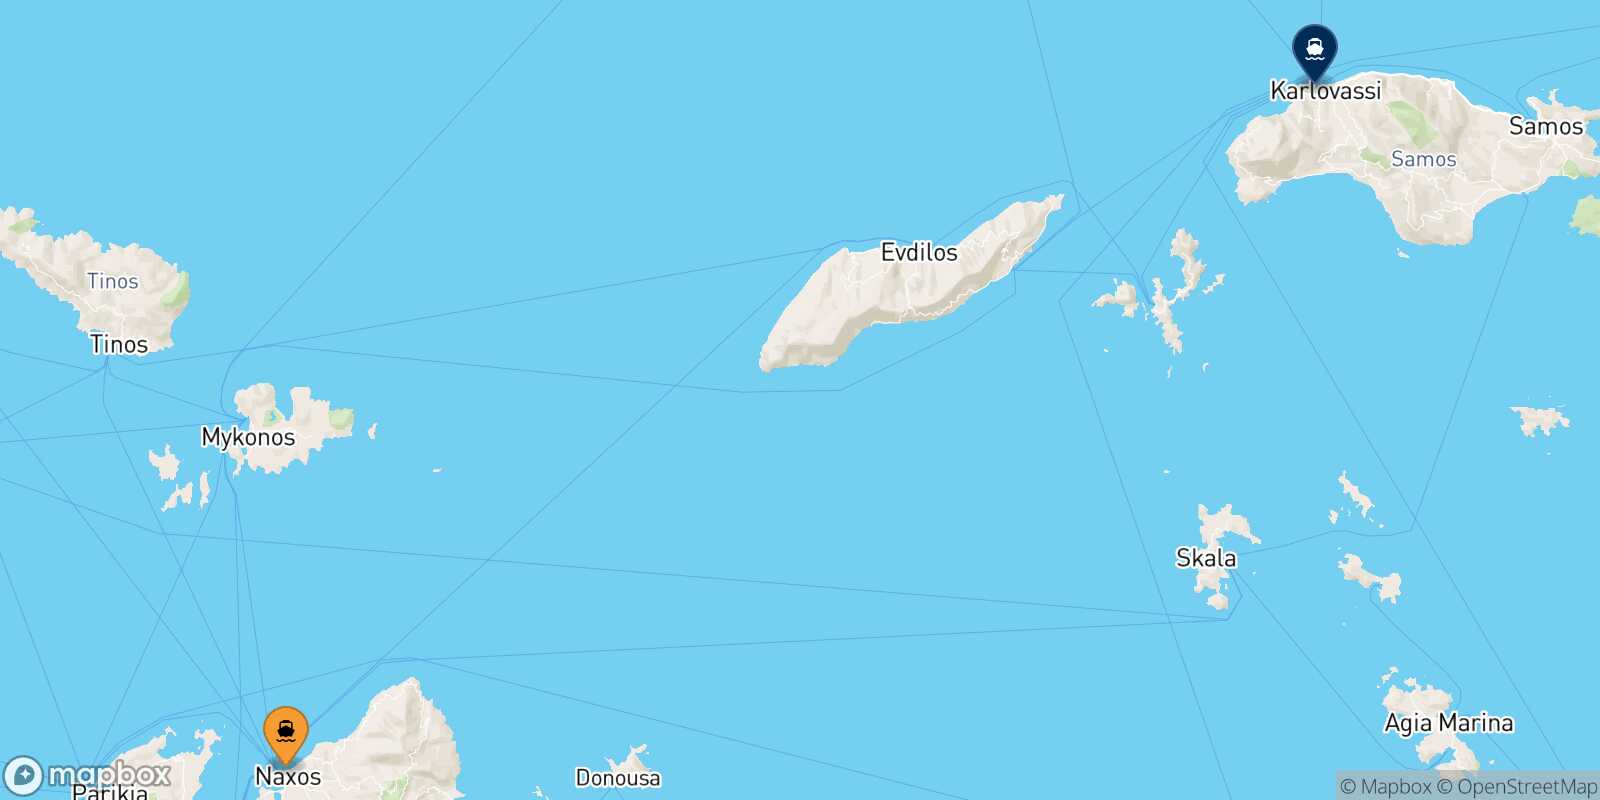 Mappa della rotta Naxos Karlovassi (Samos)